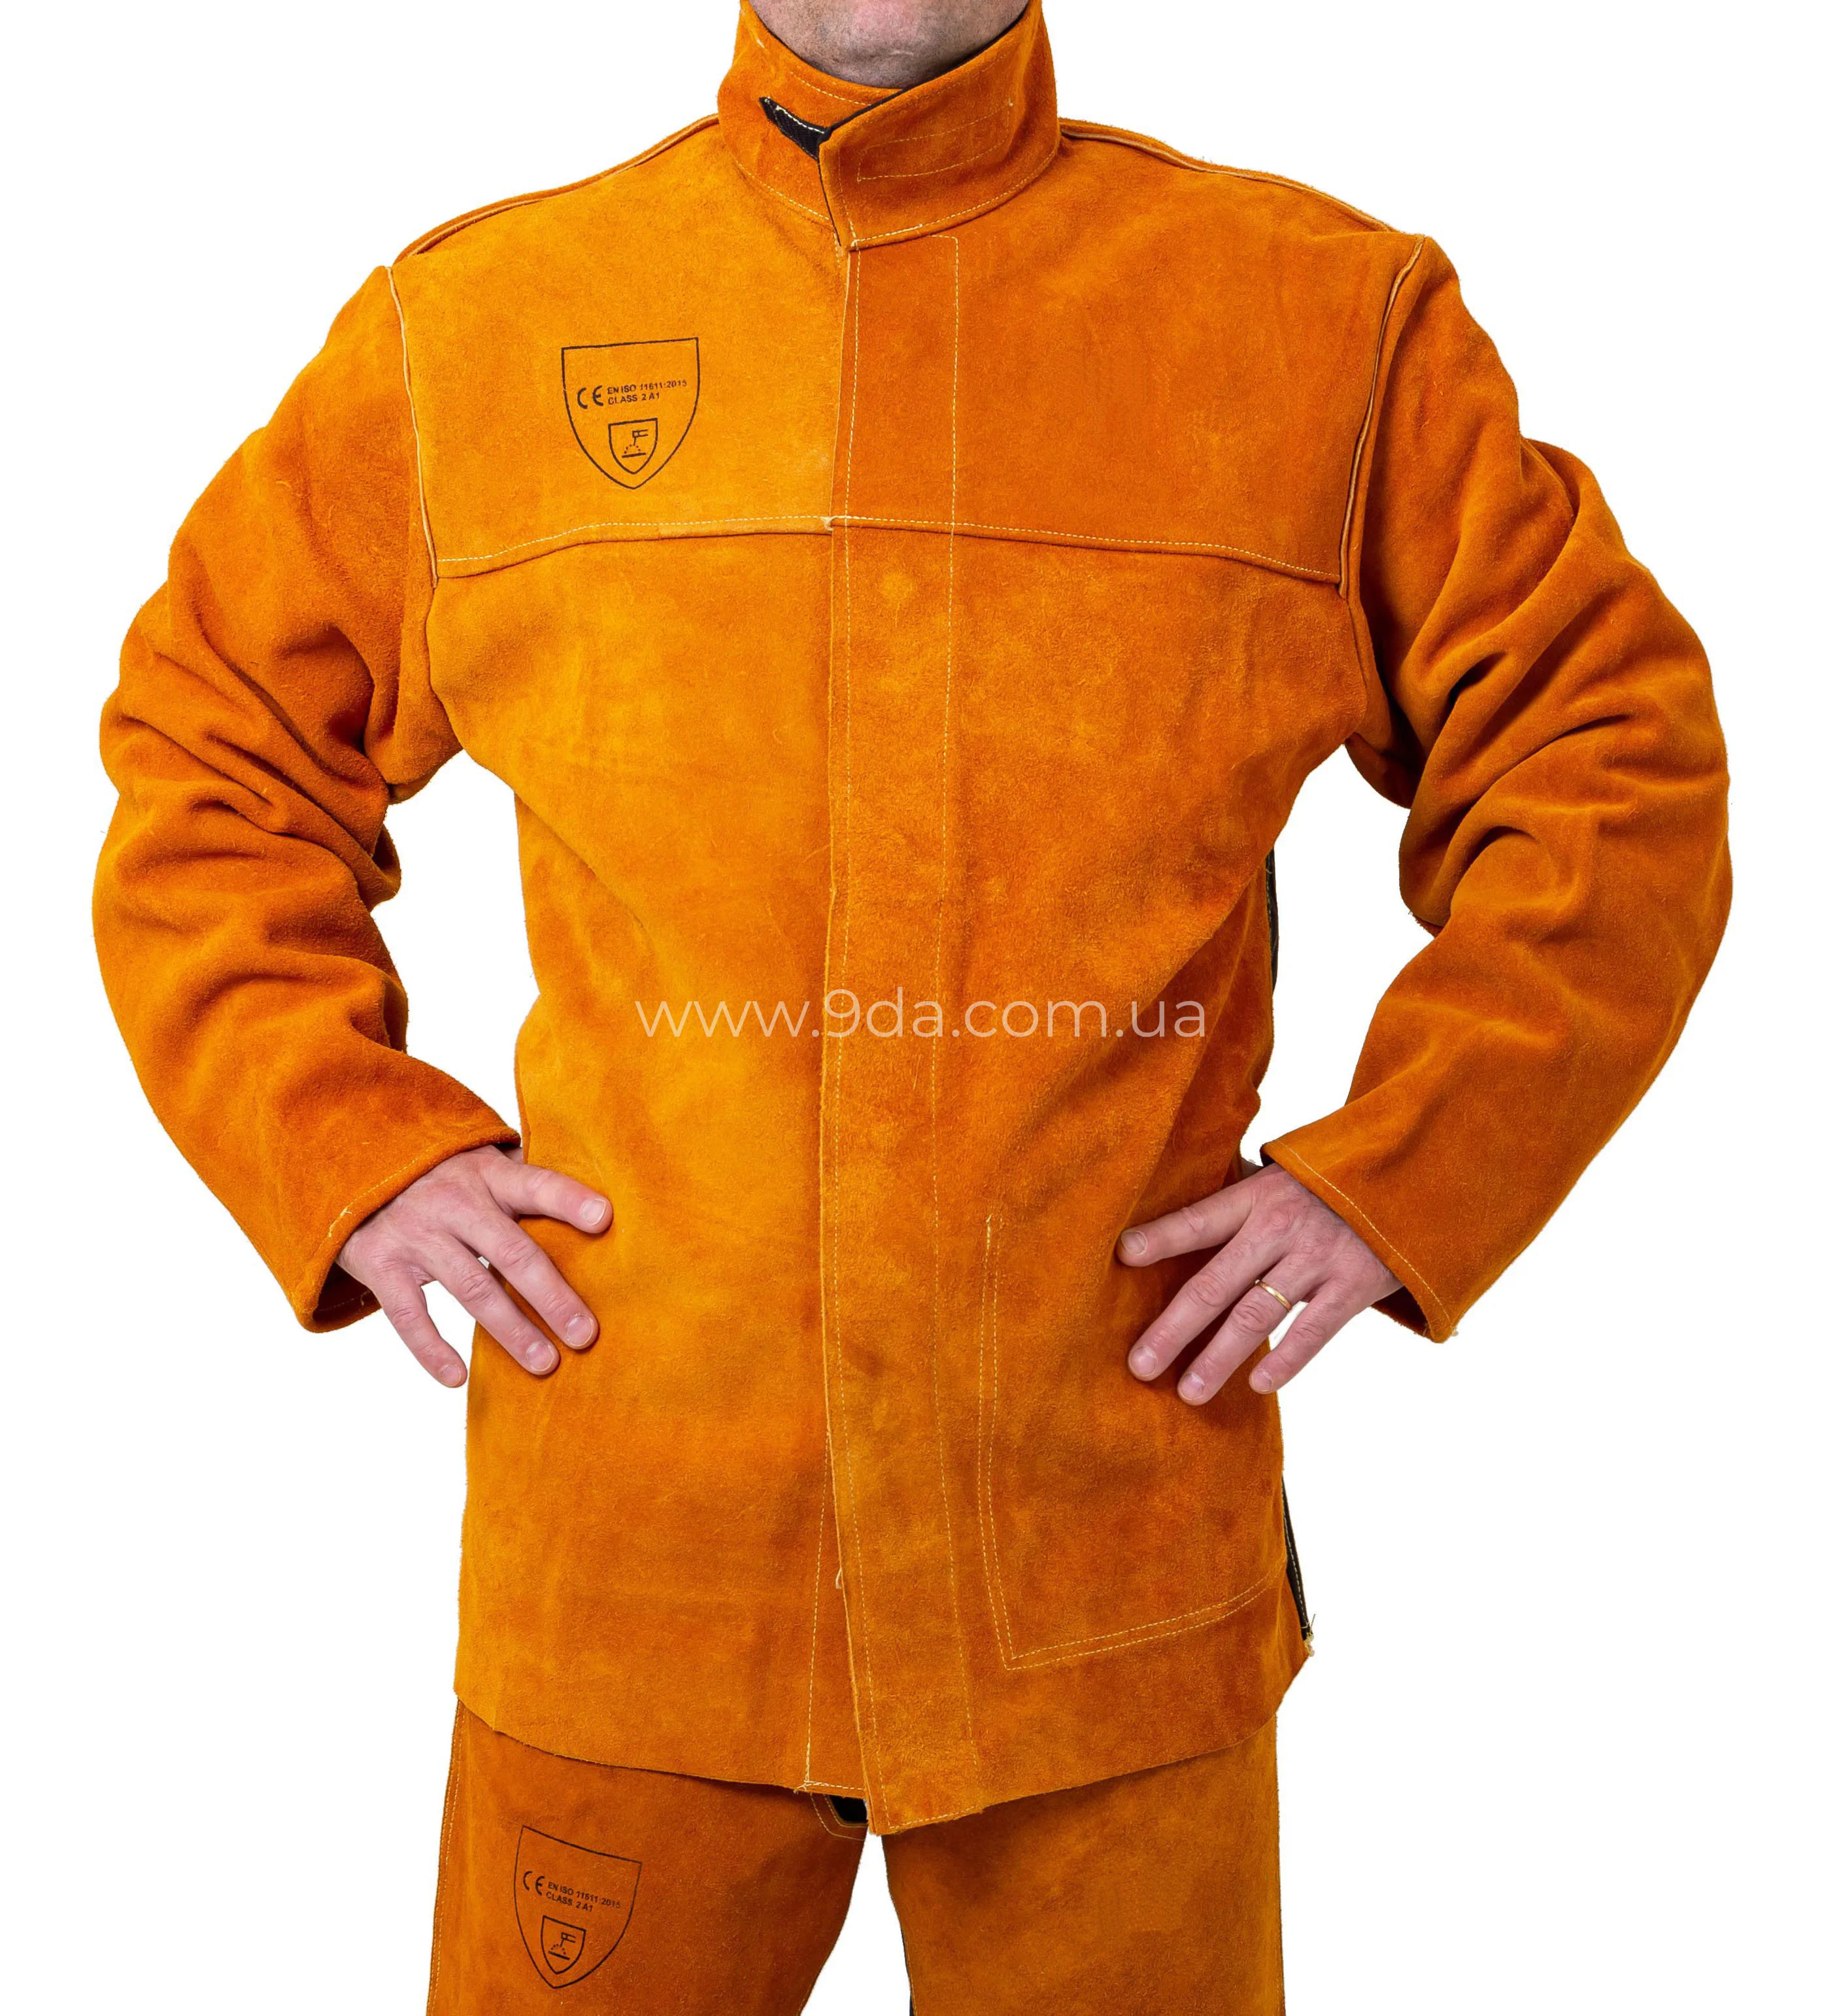 Куртка зварювальника, шкіряна, FR Front - Leather, Back Jacket Proban, size XXXL - 3